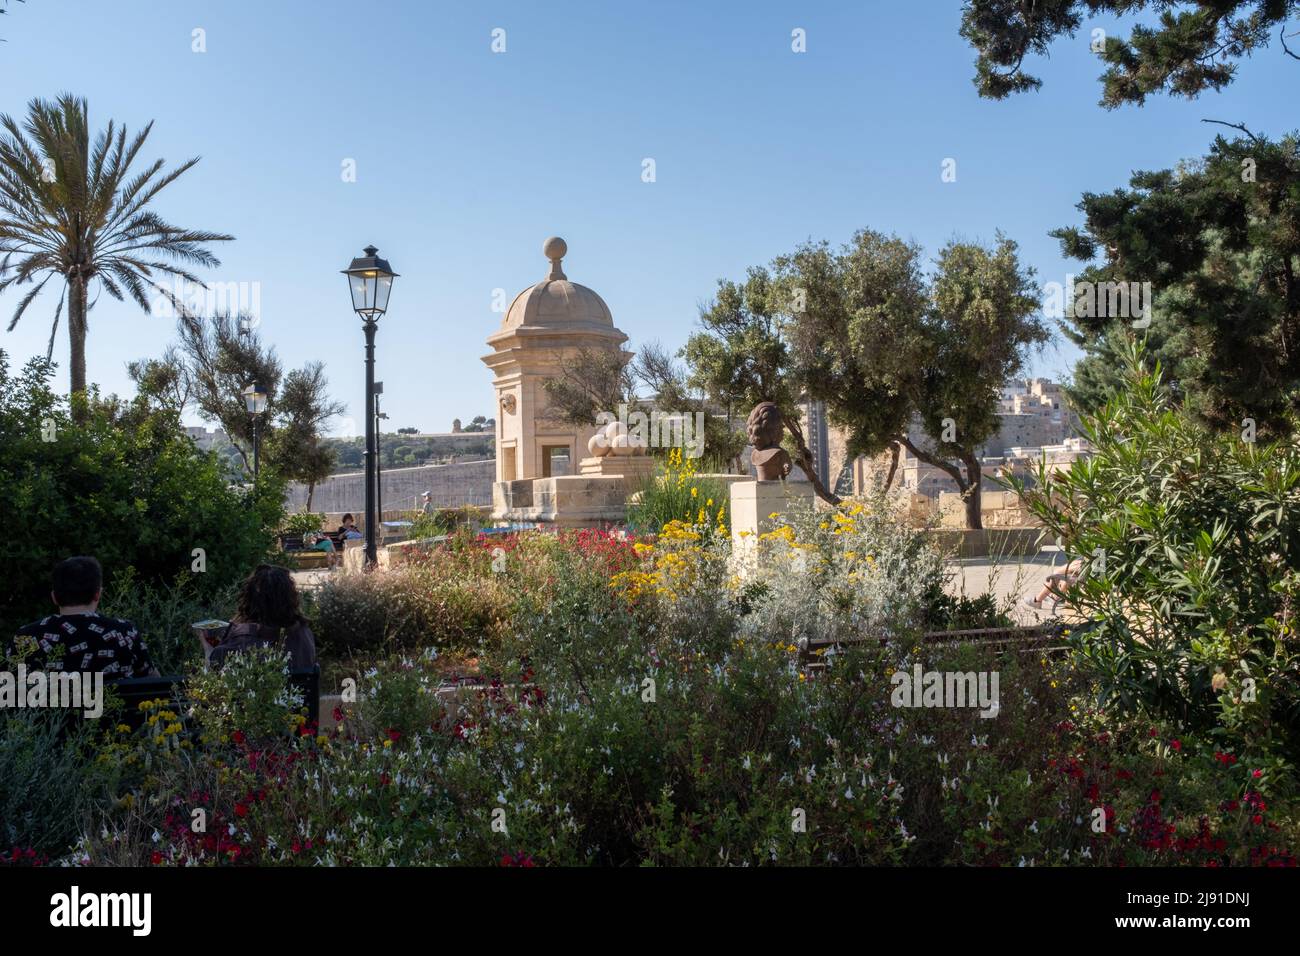 Gardjola Gardens, Senglea (L'Isla), The Three Cities, Malta Stock Photo